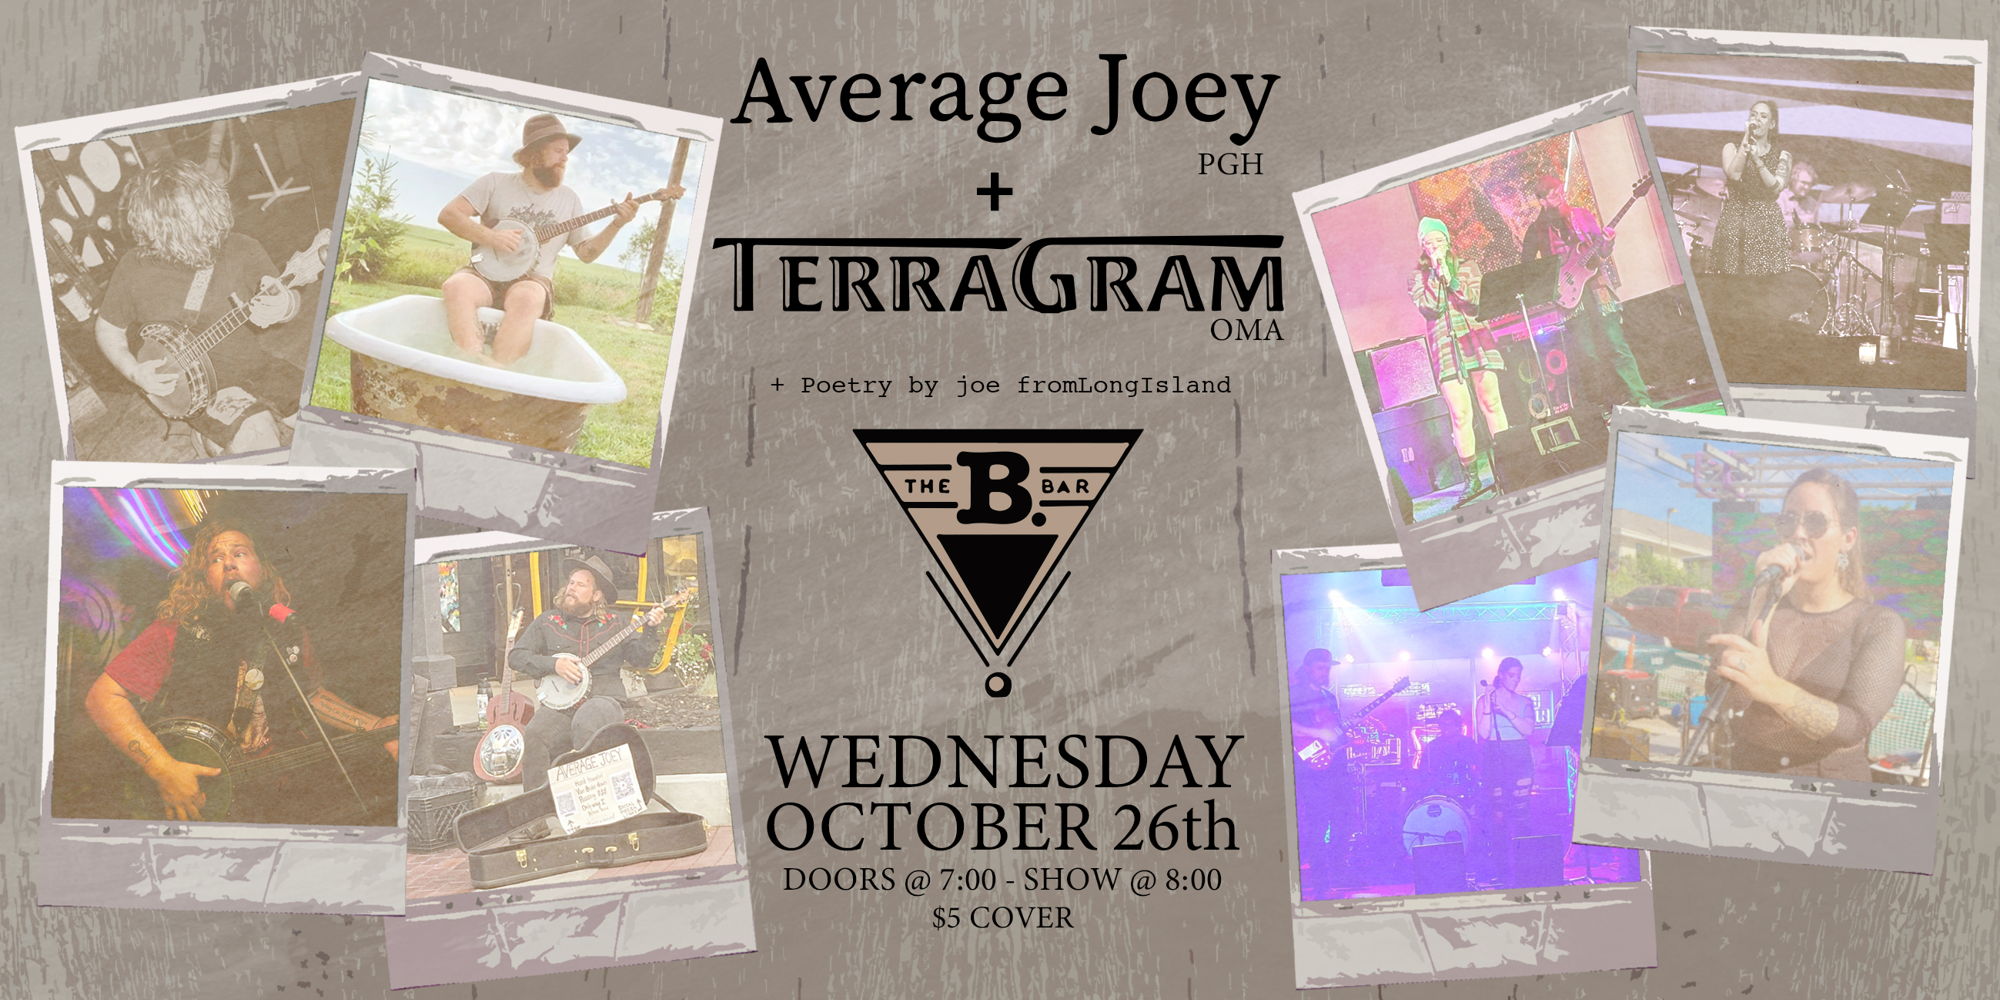 Average Joey + TerraGram at The B Bar Omaha promotional image